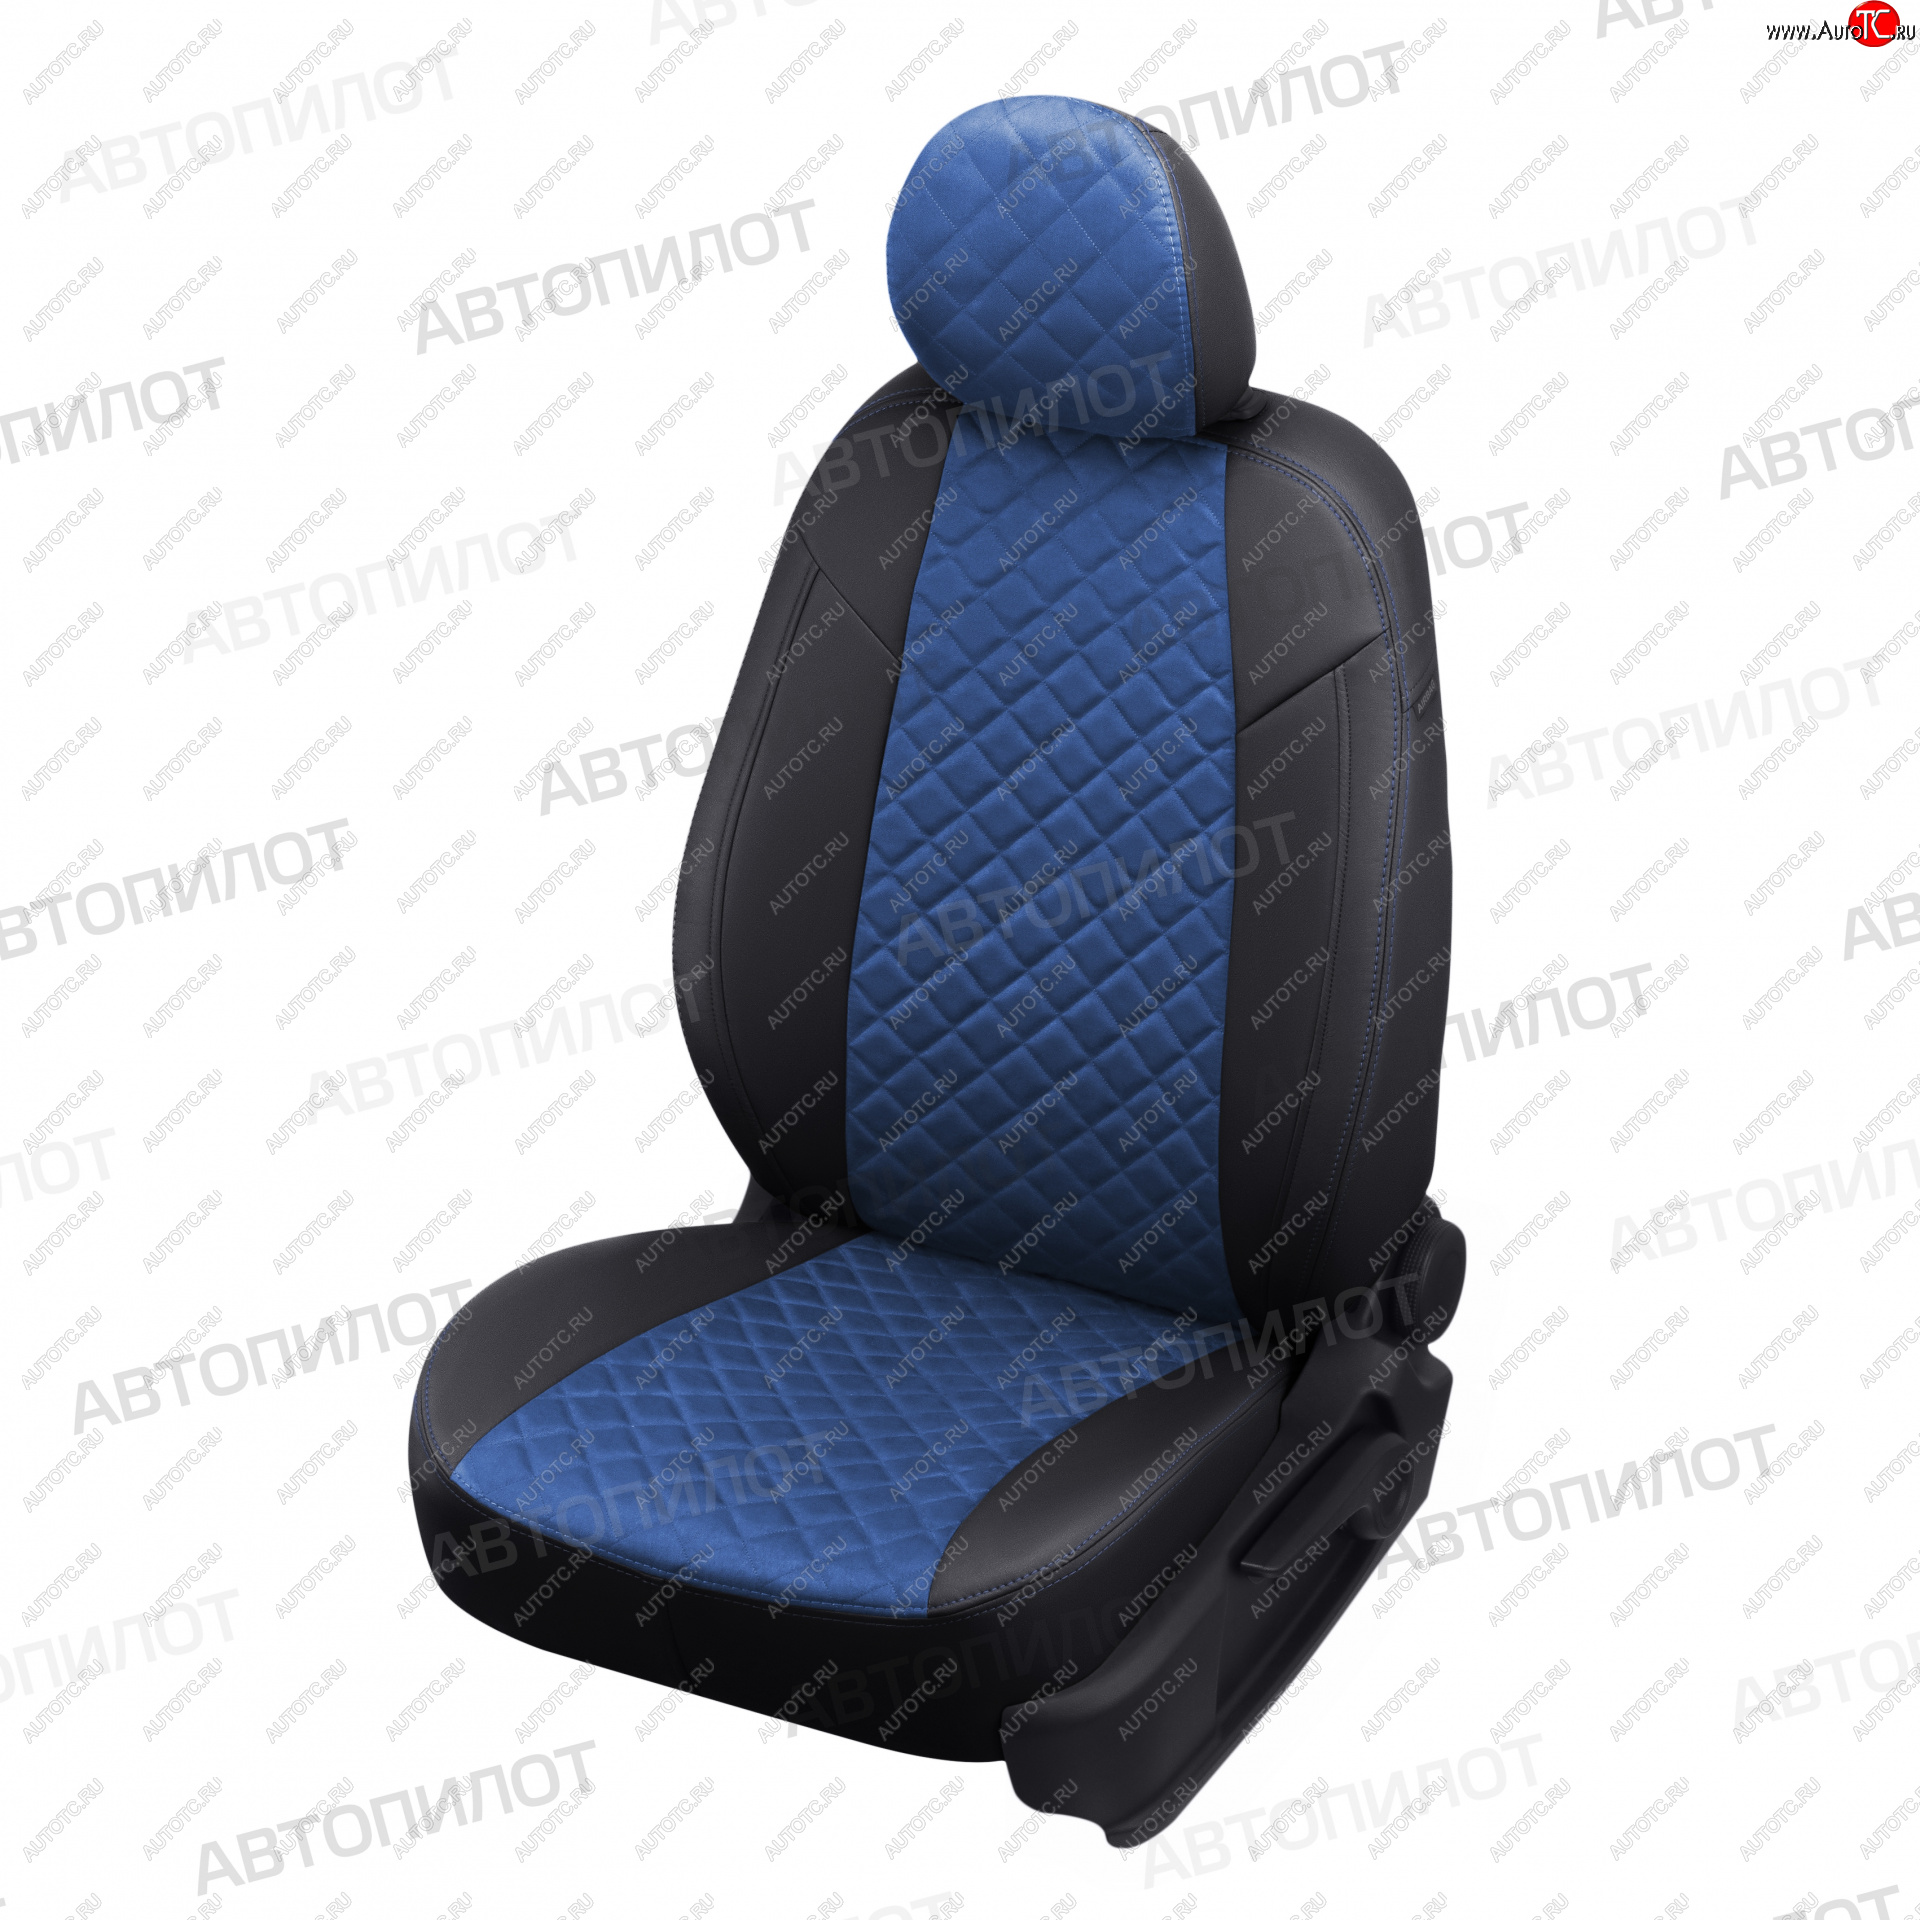 13 999 р. Чехлы сидений (экокожа/алькантара, 14-16) Автопилот Ромб  Chevrolet Niva  2123 (2009-2020), Лада 2123 (Нива Шевроле) (2009-2020) (черный/синий)